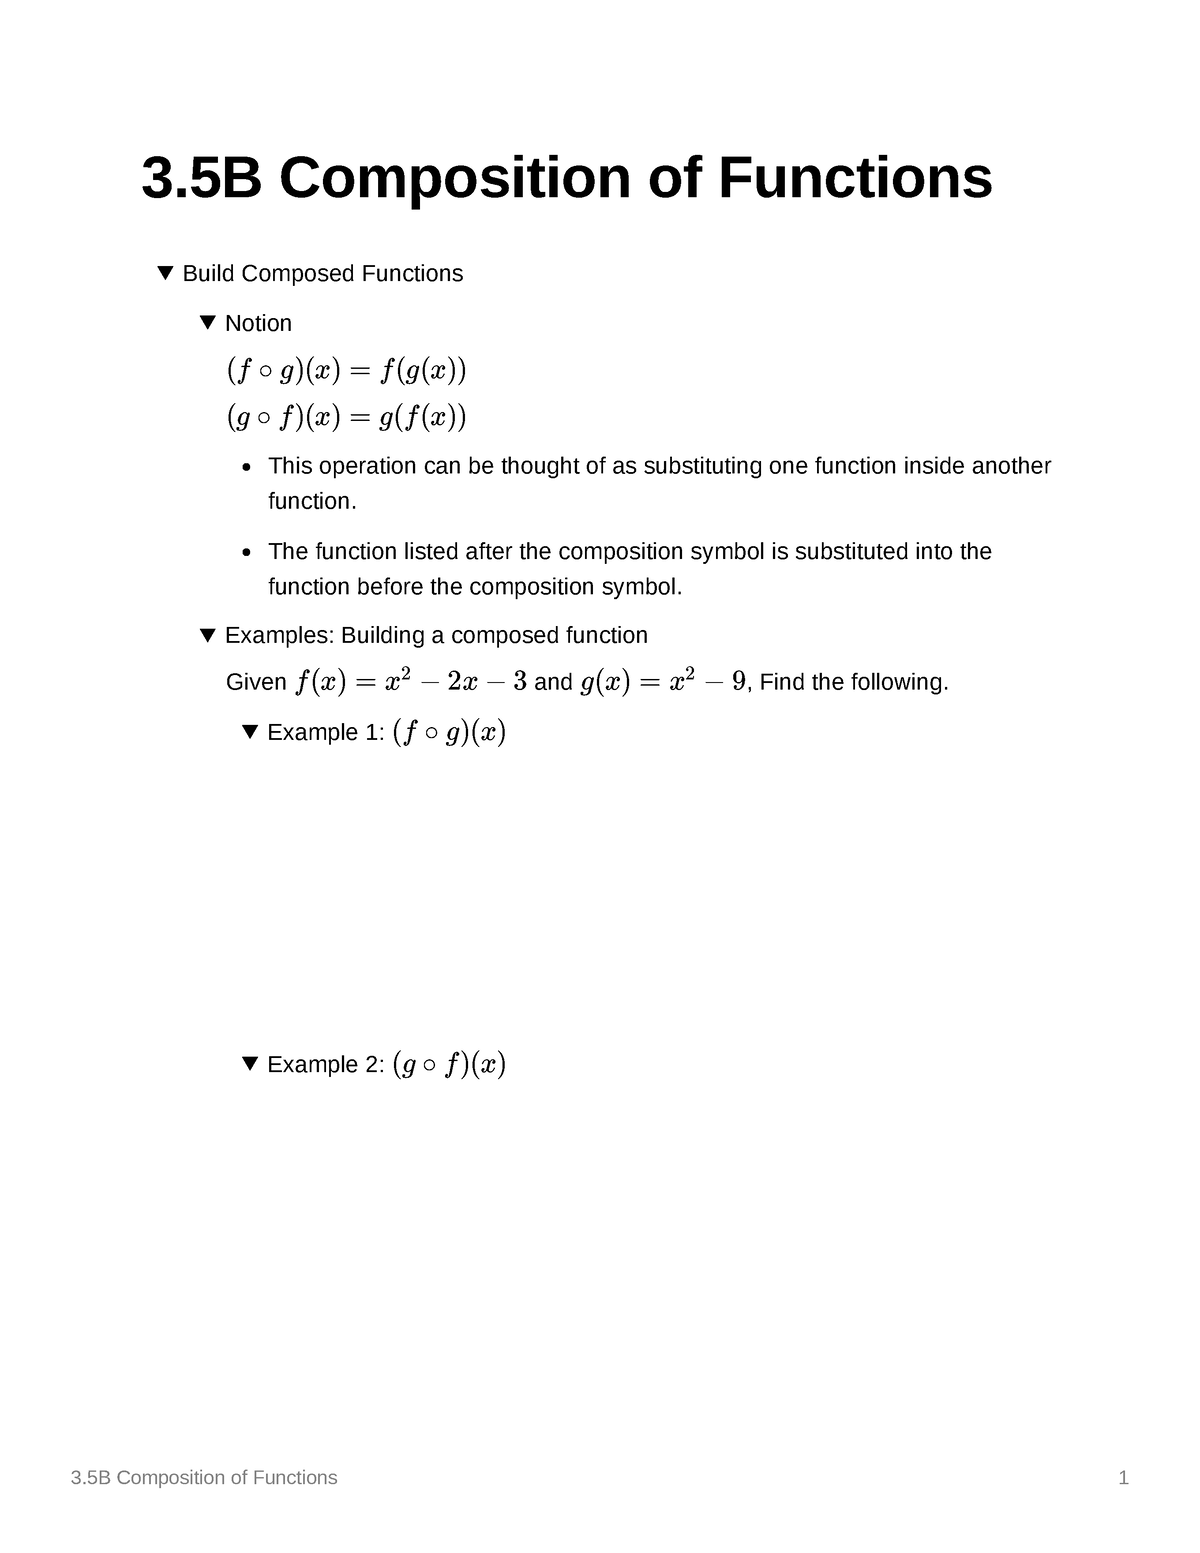 composition-of-functions-3-composition-of-functions-build-composed